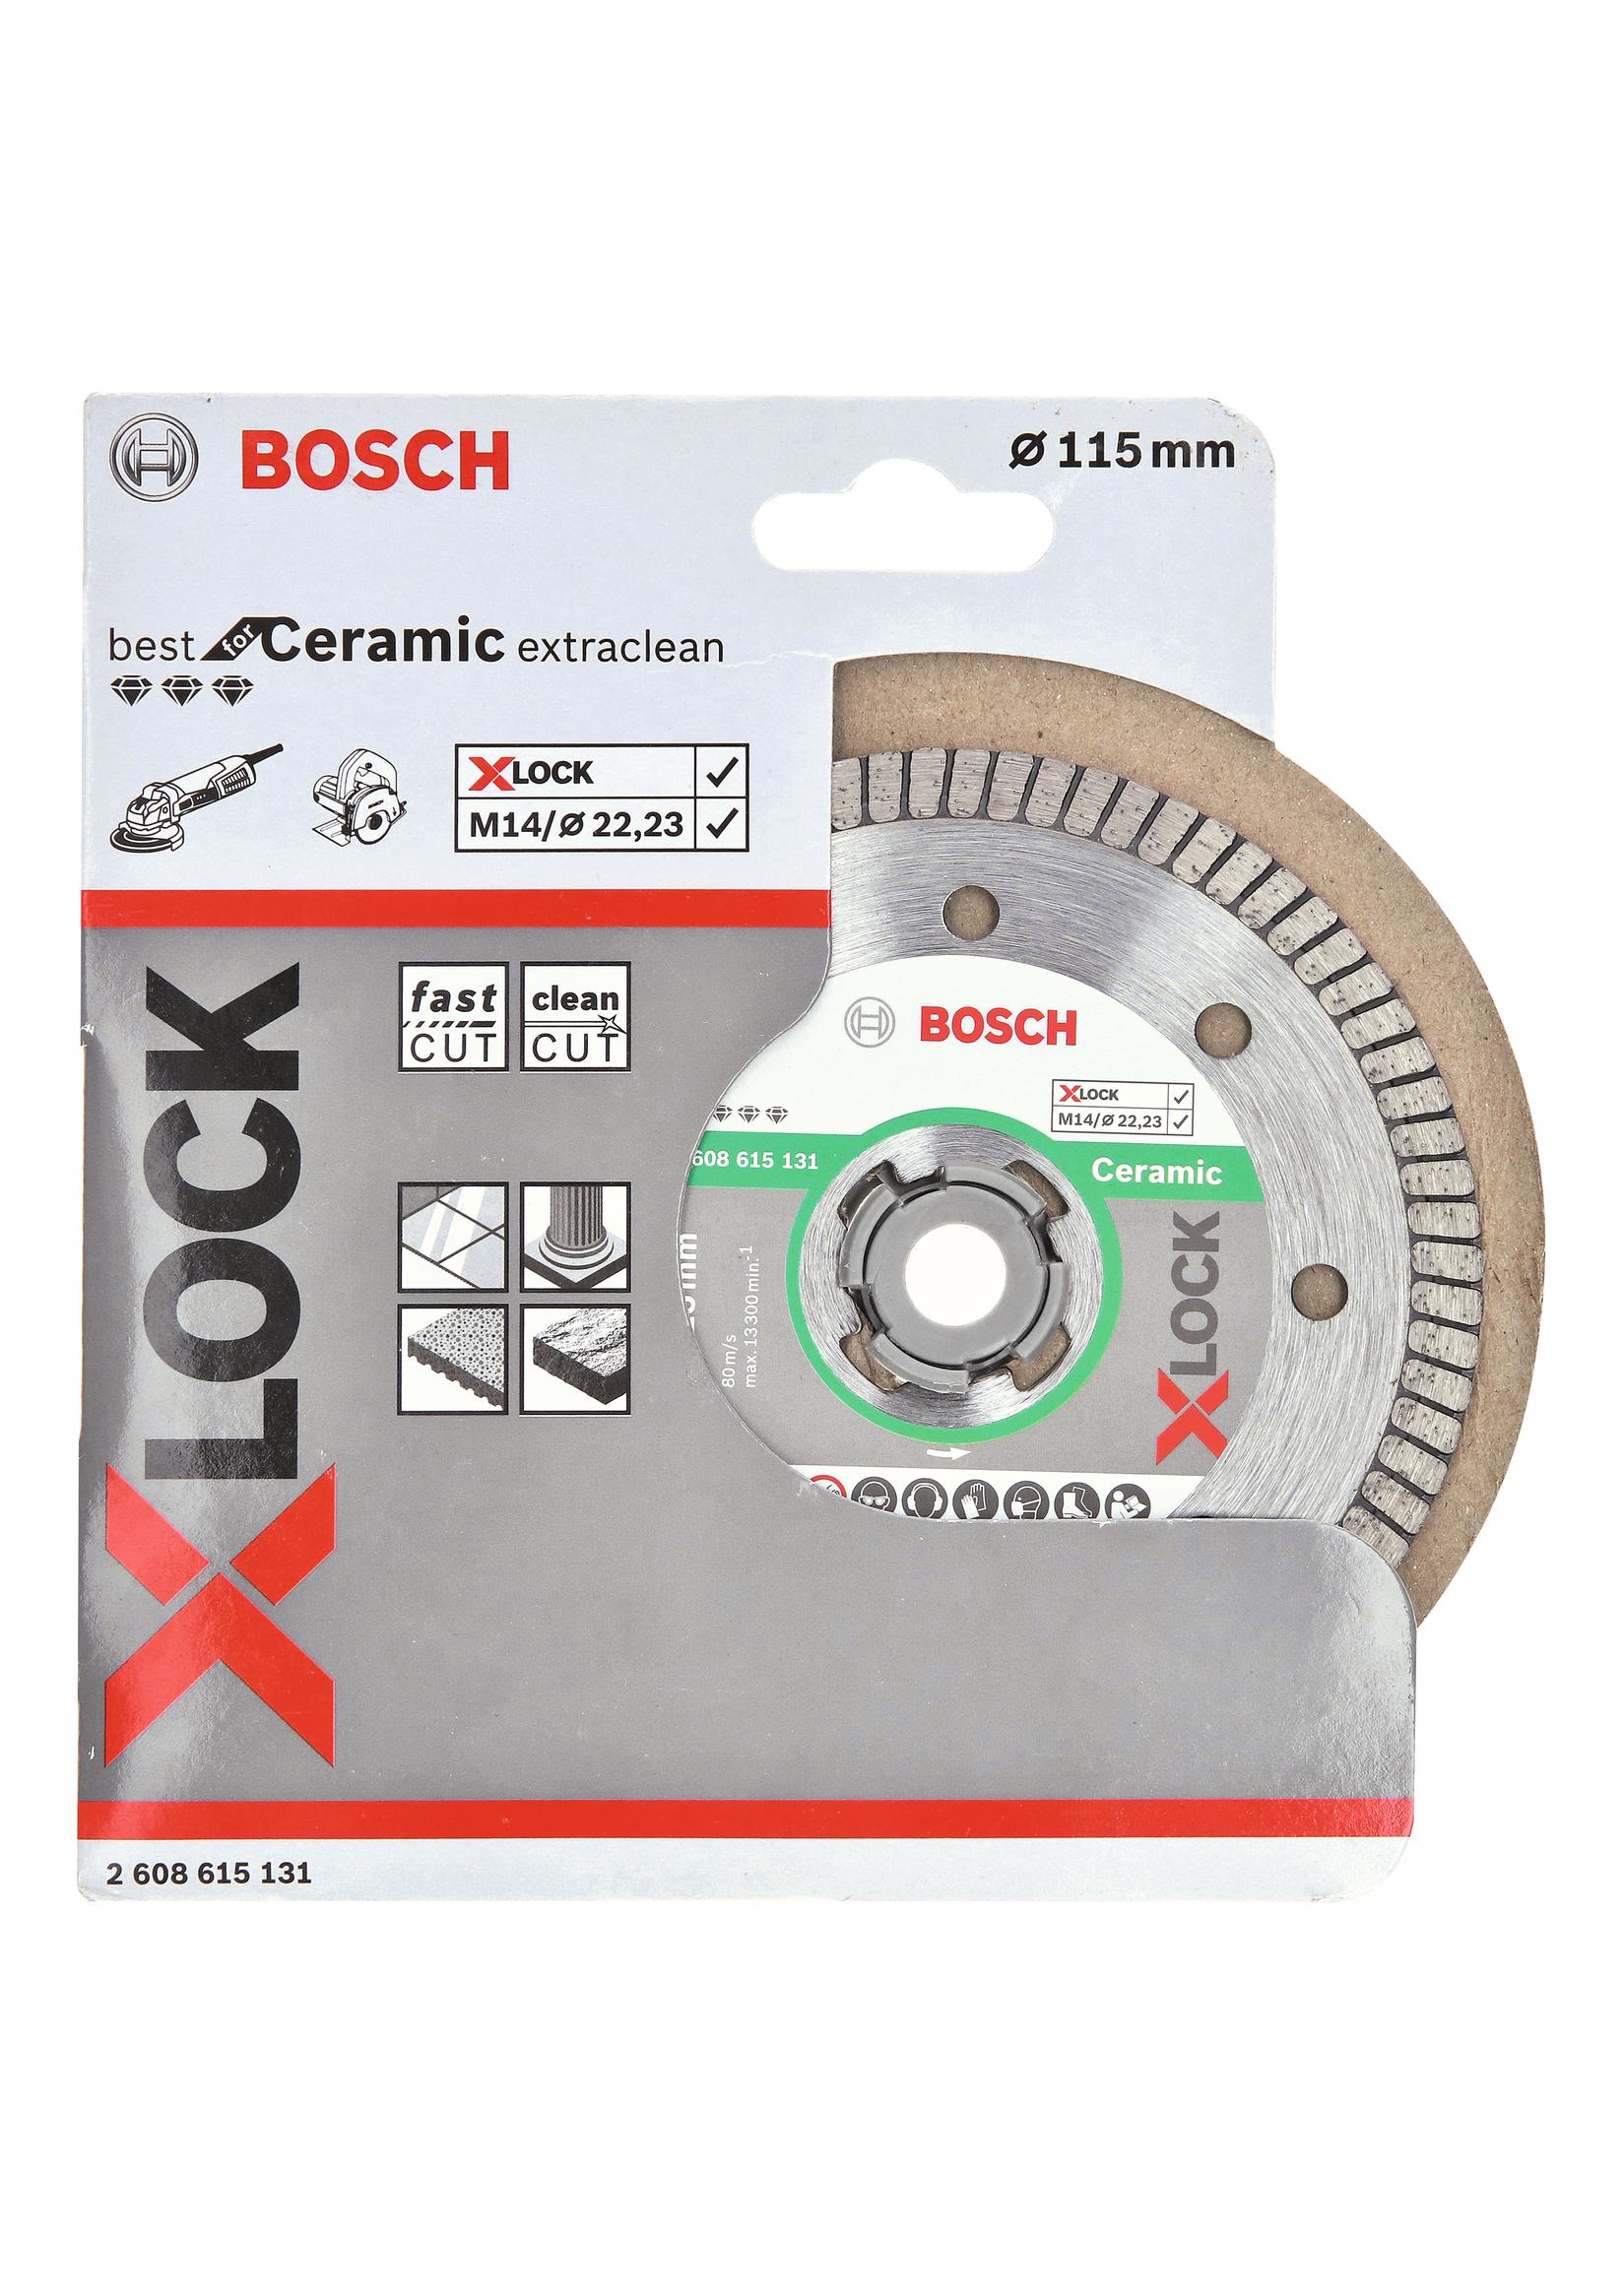 Selected image for Bosch X-LOCK Best for Ceramic Extraclean Turbo dijamantska rezna ploča 115x22,23x1,4x7 2608615131, 115 x 22,23 x 1,4 x 7 mm